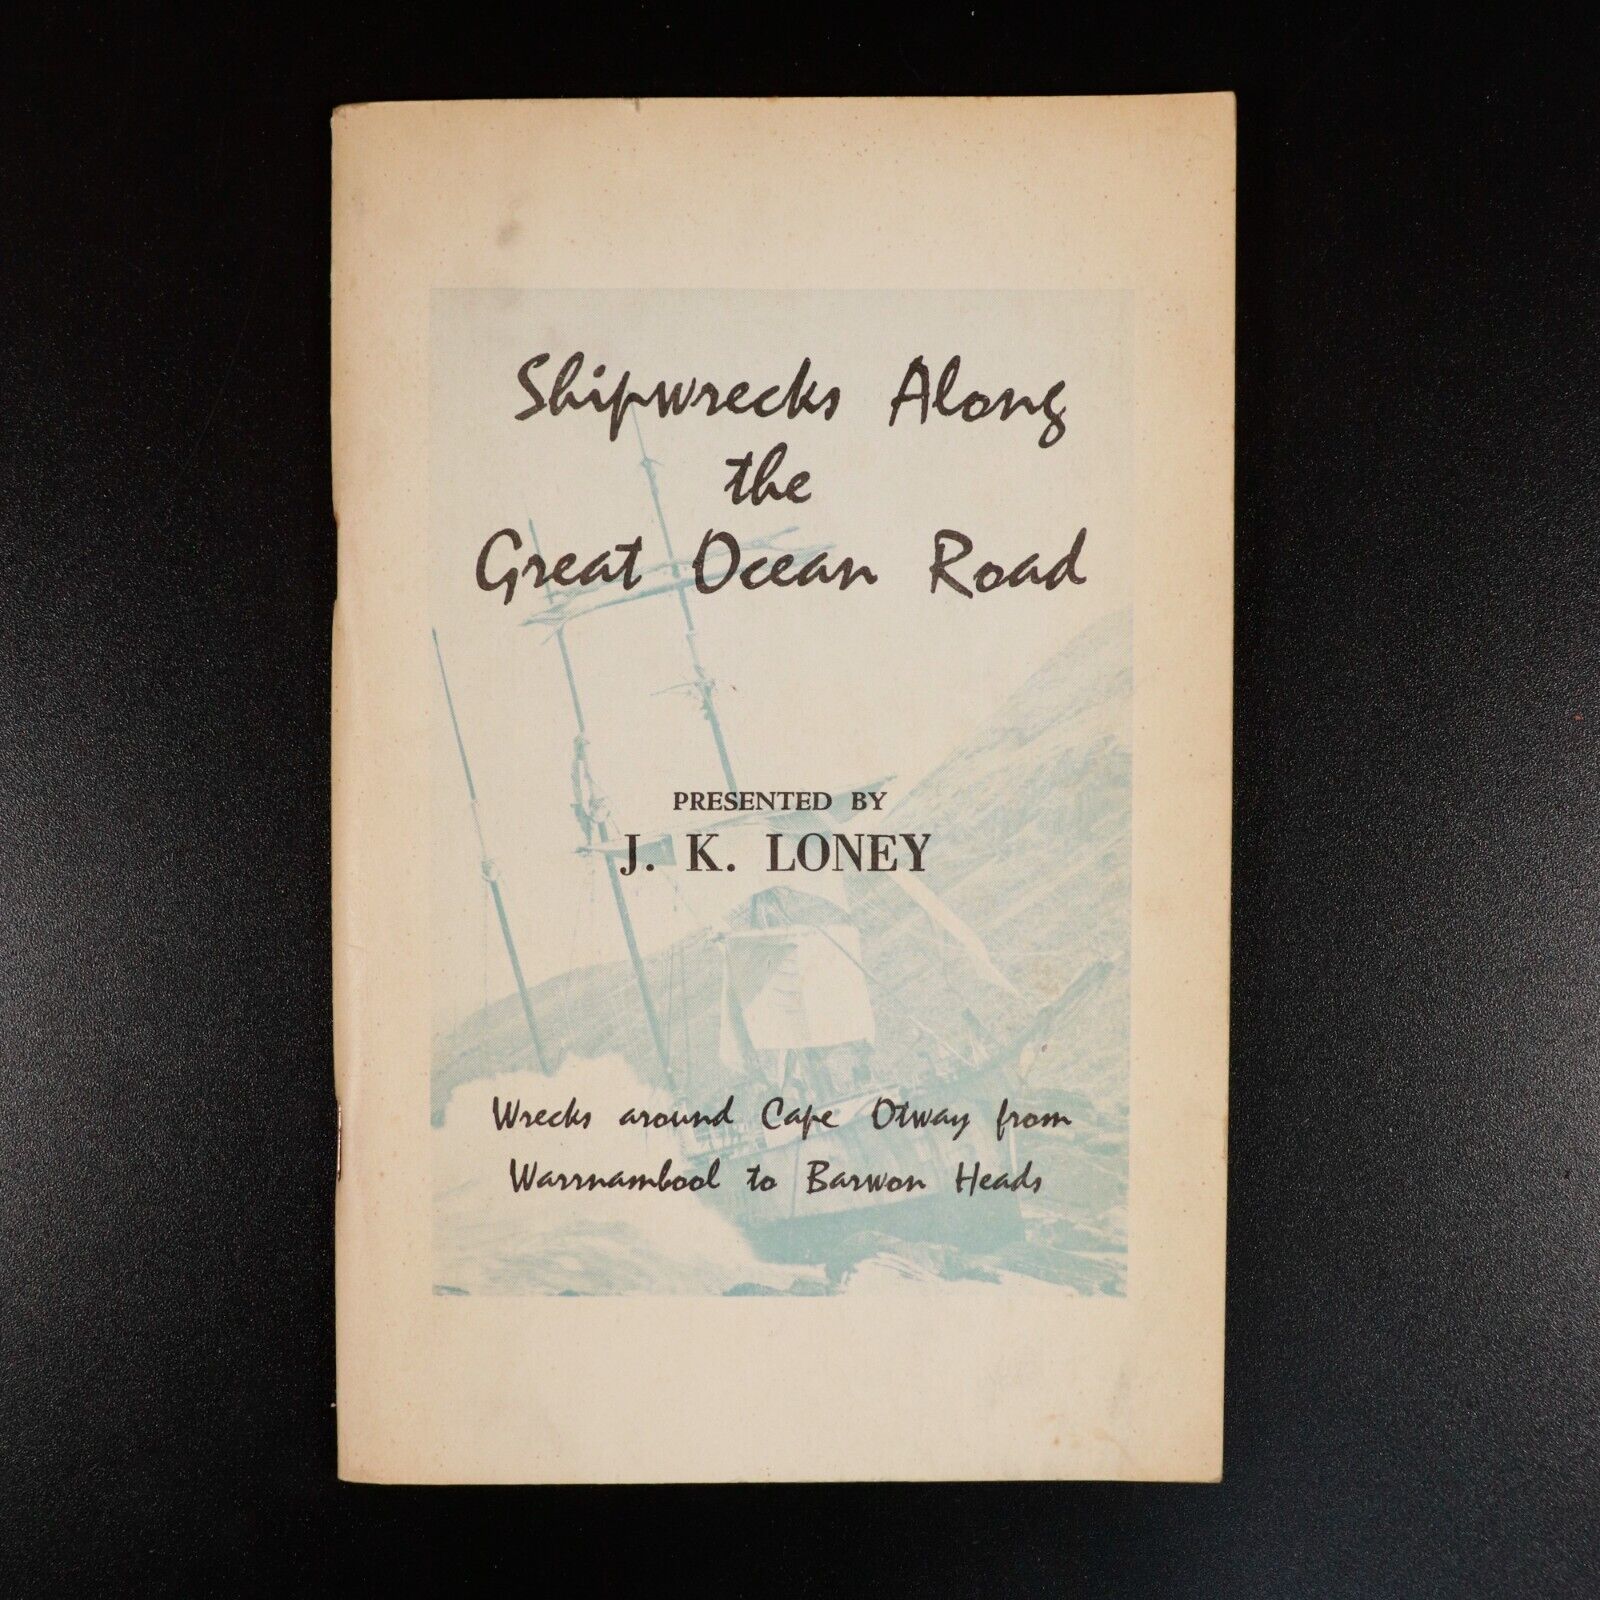 1967 Shipwrecks Along The Great Ocean Road Australian Maritime History Book